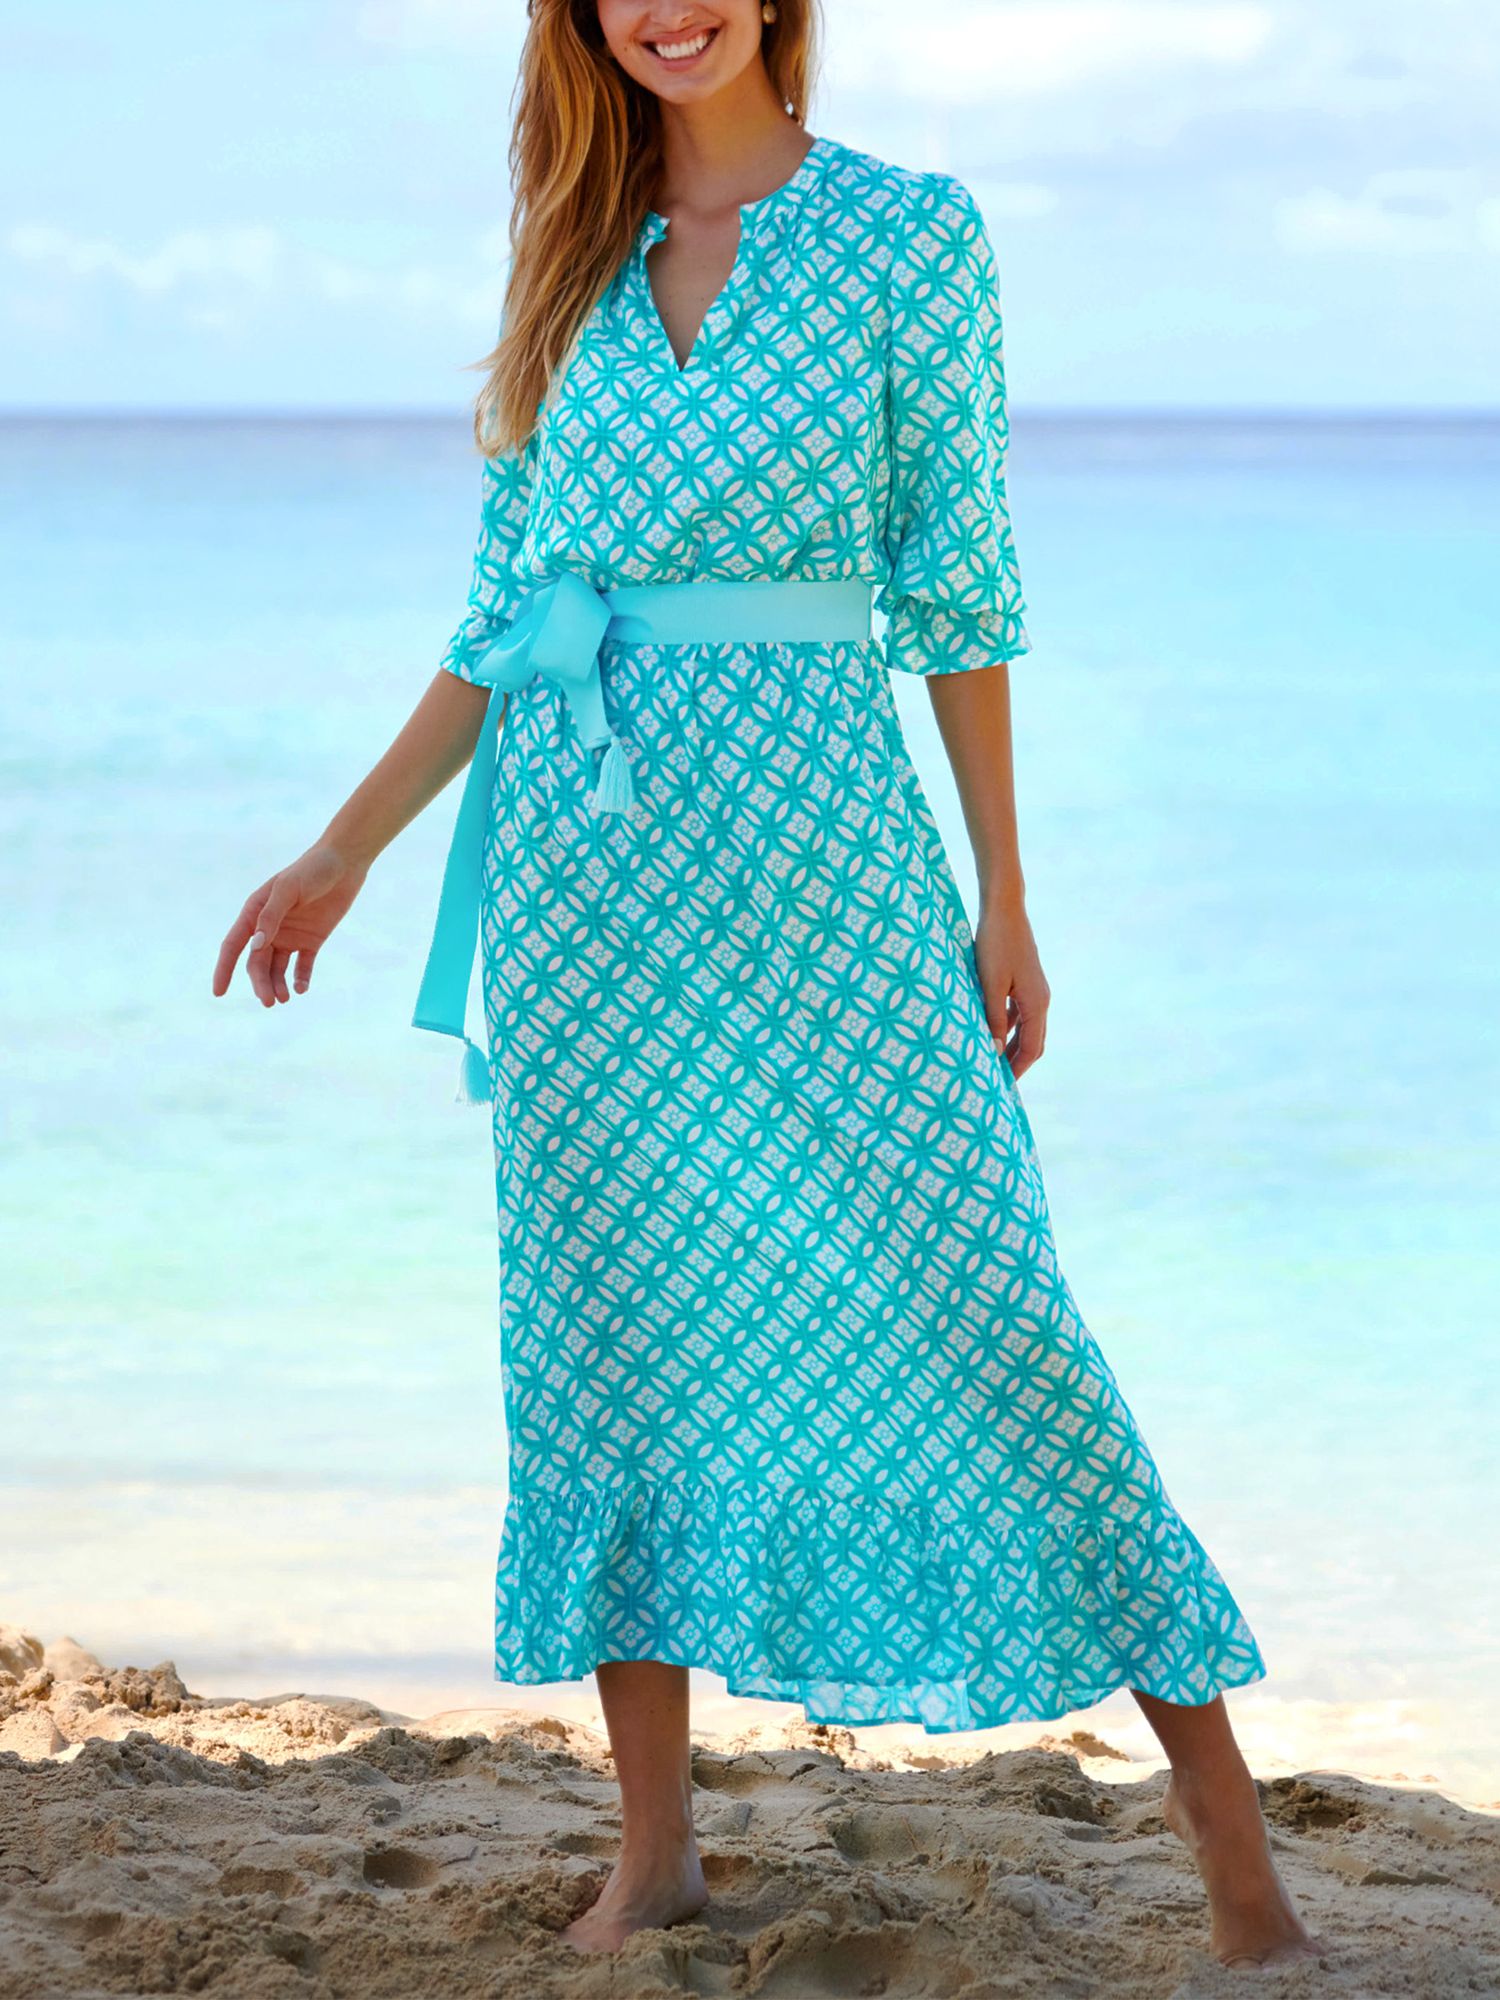 Aspiga Maeve Geometric Print Contrast Belt Maxi Dress, Turquoise/Multi, XS